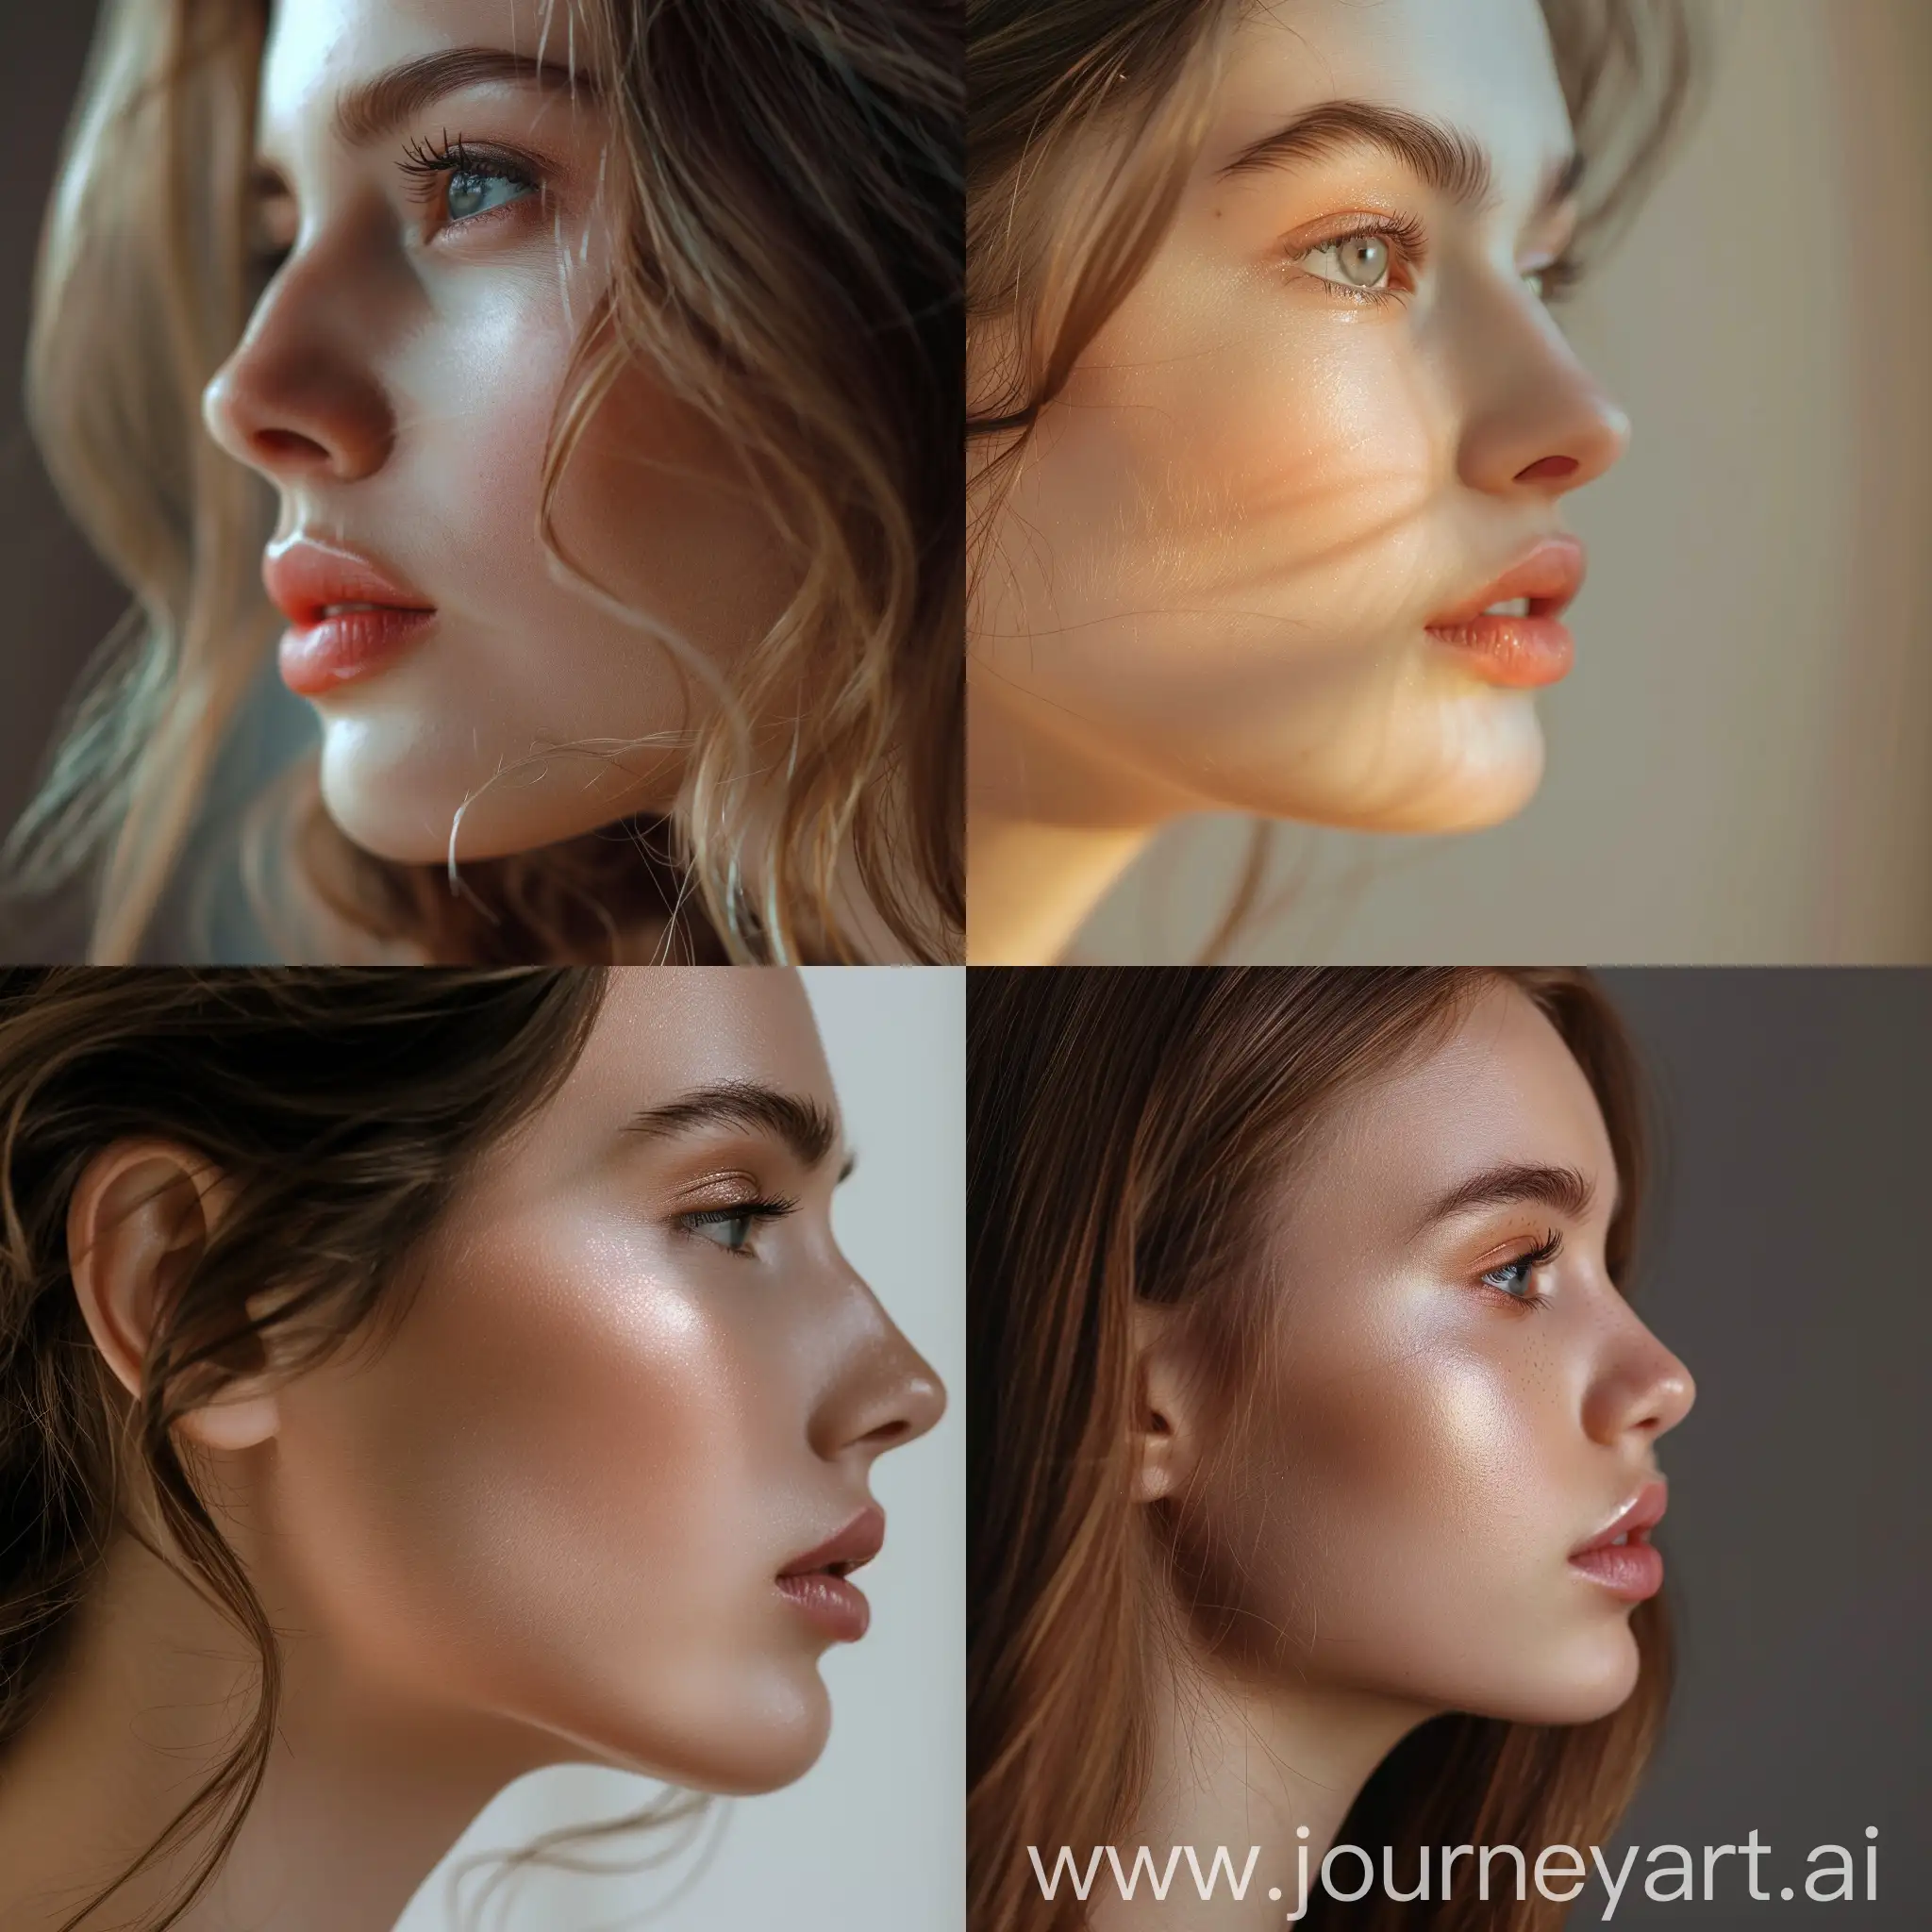 Beautiful-Girl-in-Profile-with-Natural-Makeup-CloseUp-Portrait